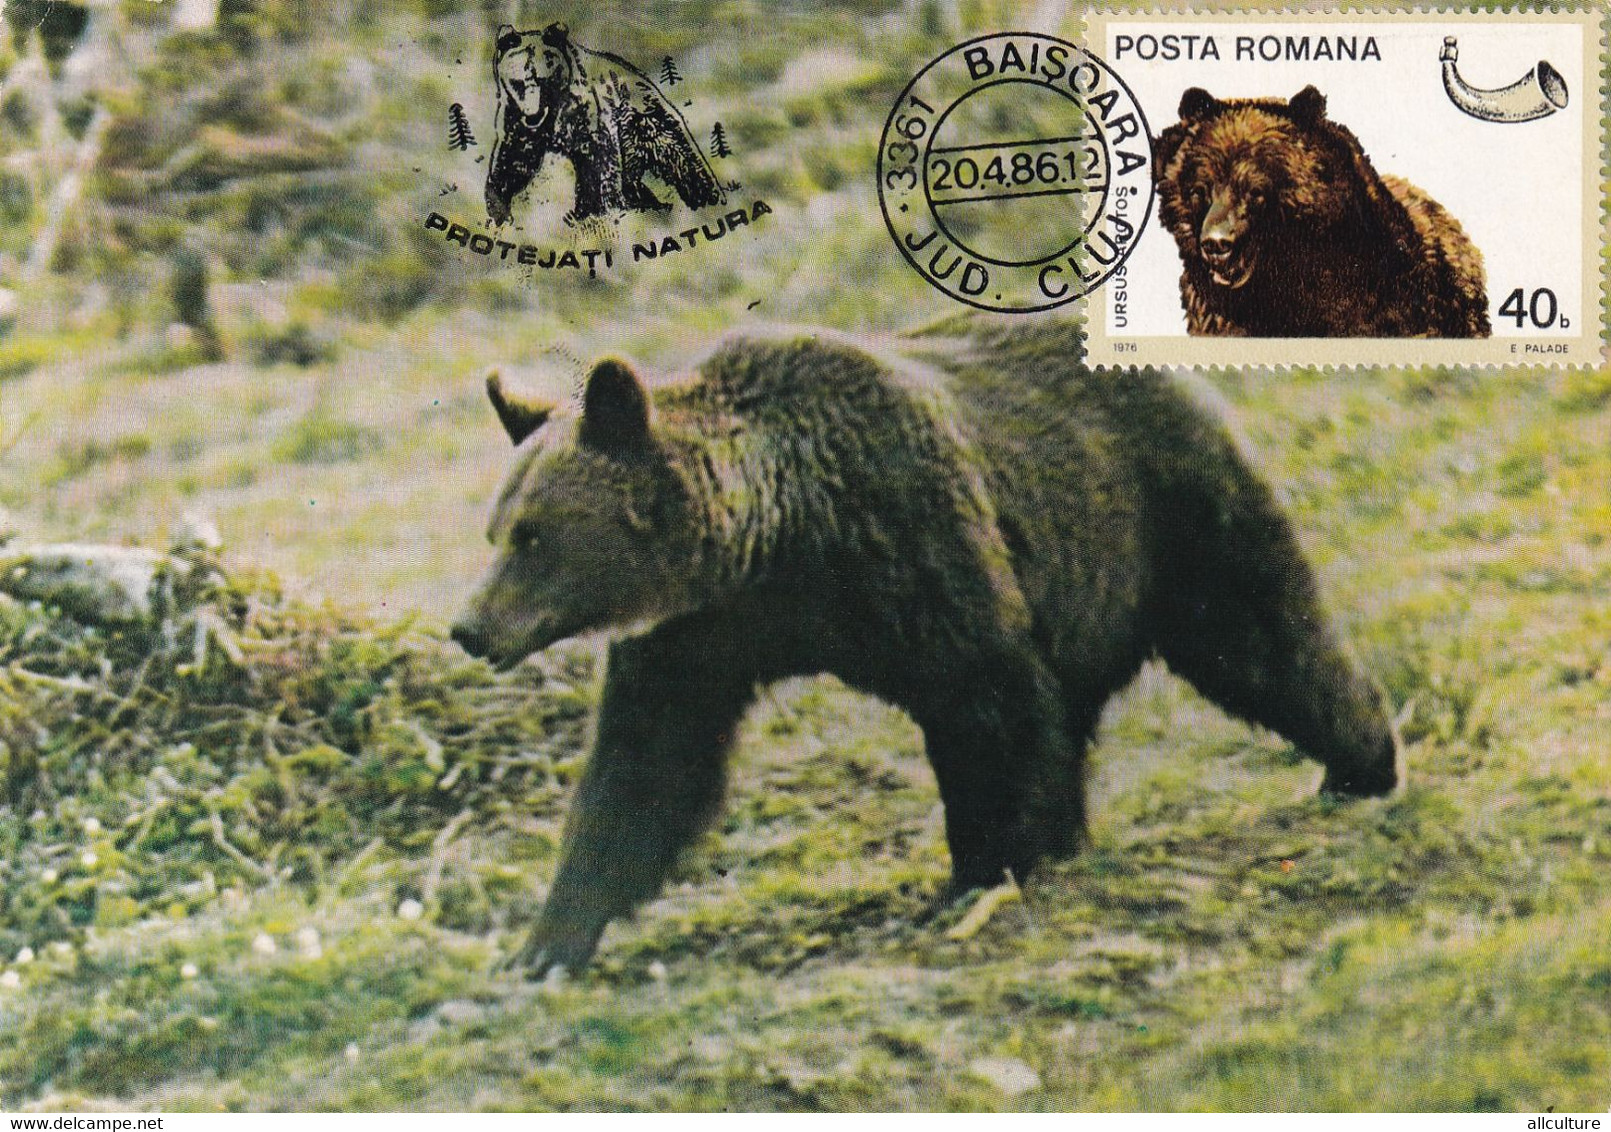 A9053- URSUS ARCTOS, BROWN BEAR, BAISOARA 1986 MAX CARD ROMANIA  USED STAMP ON BACK - Bären